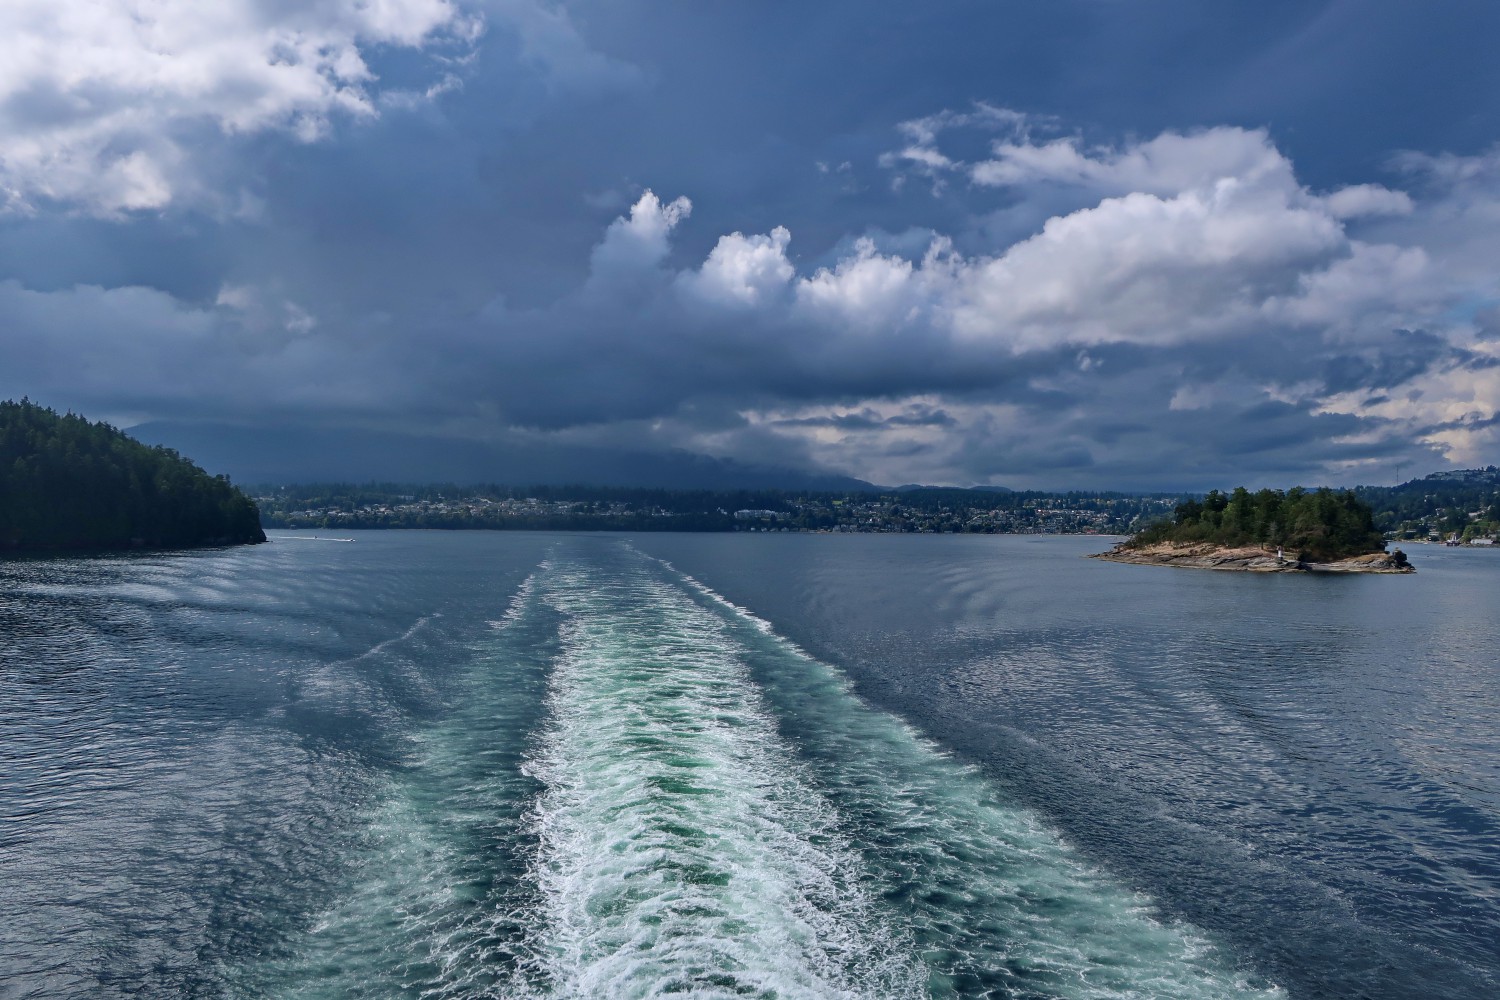 Leaving Vancouver Island